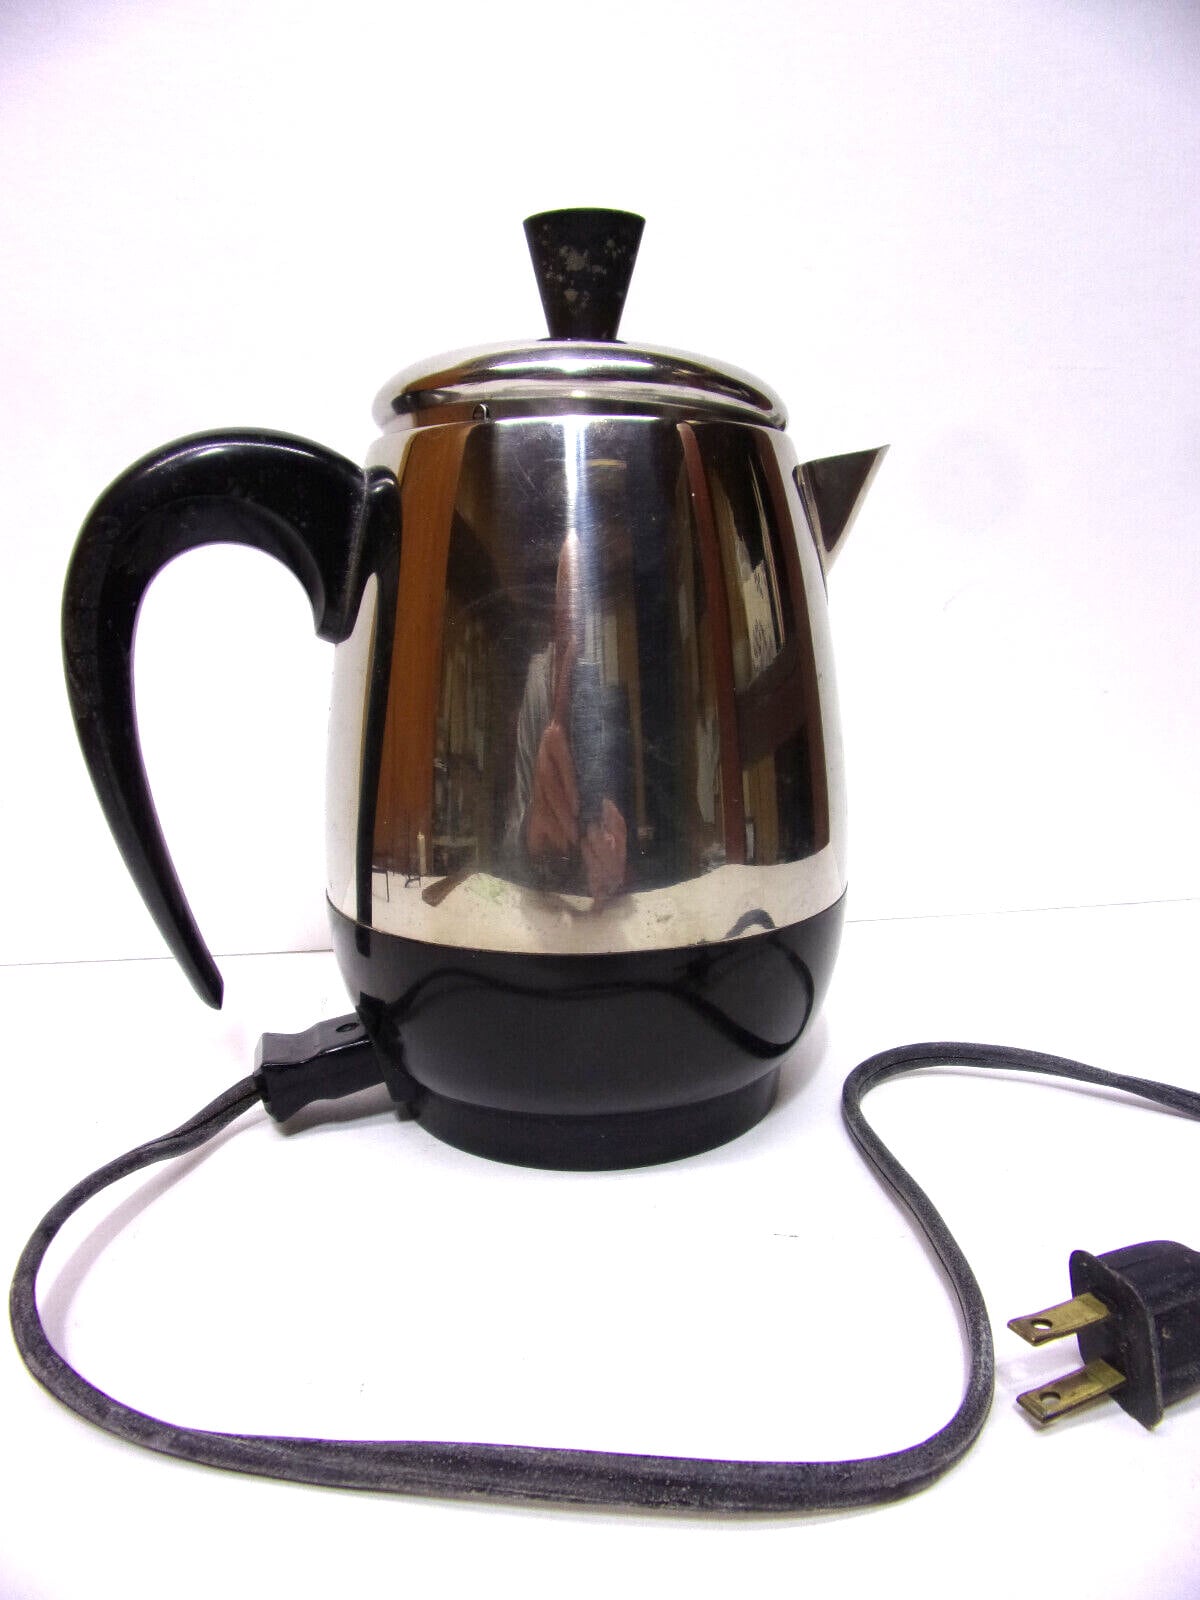  Farberware 2-4-Cup Electric Percolator coffee maker